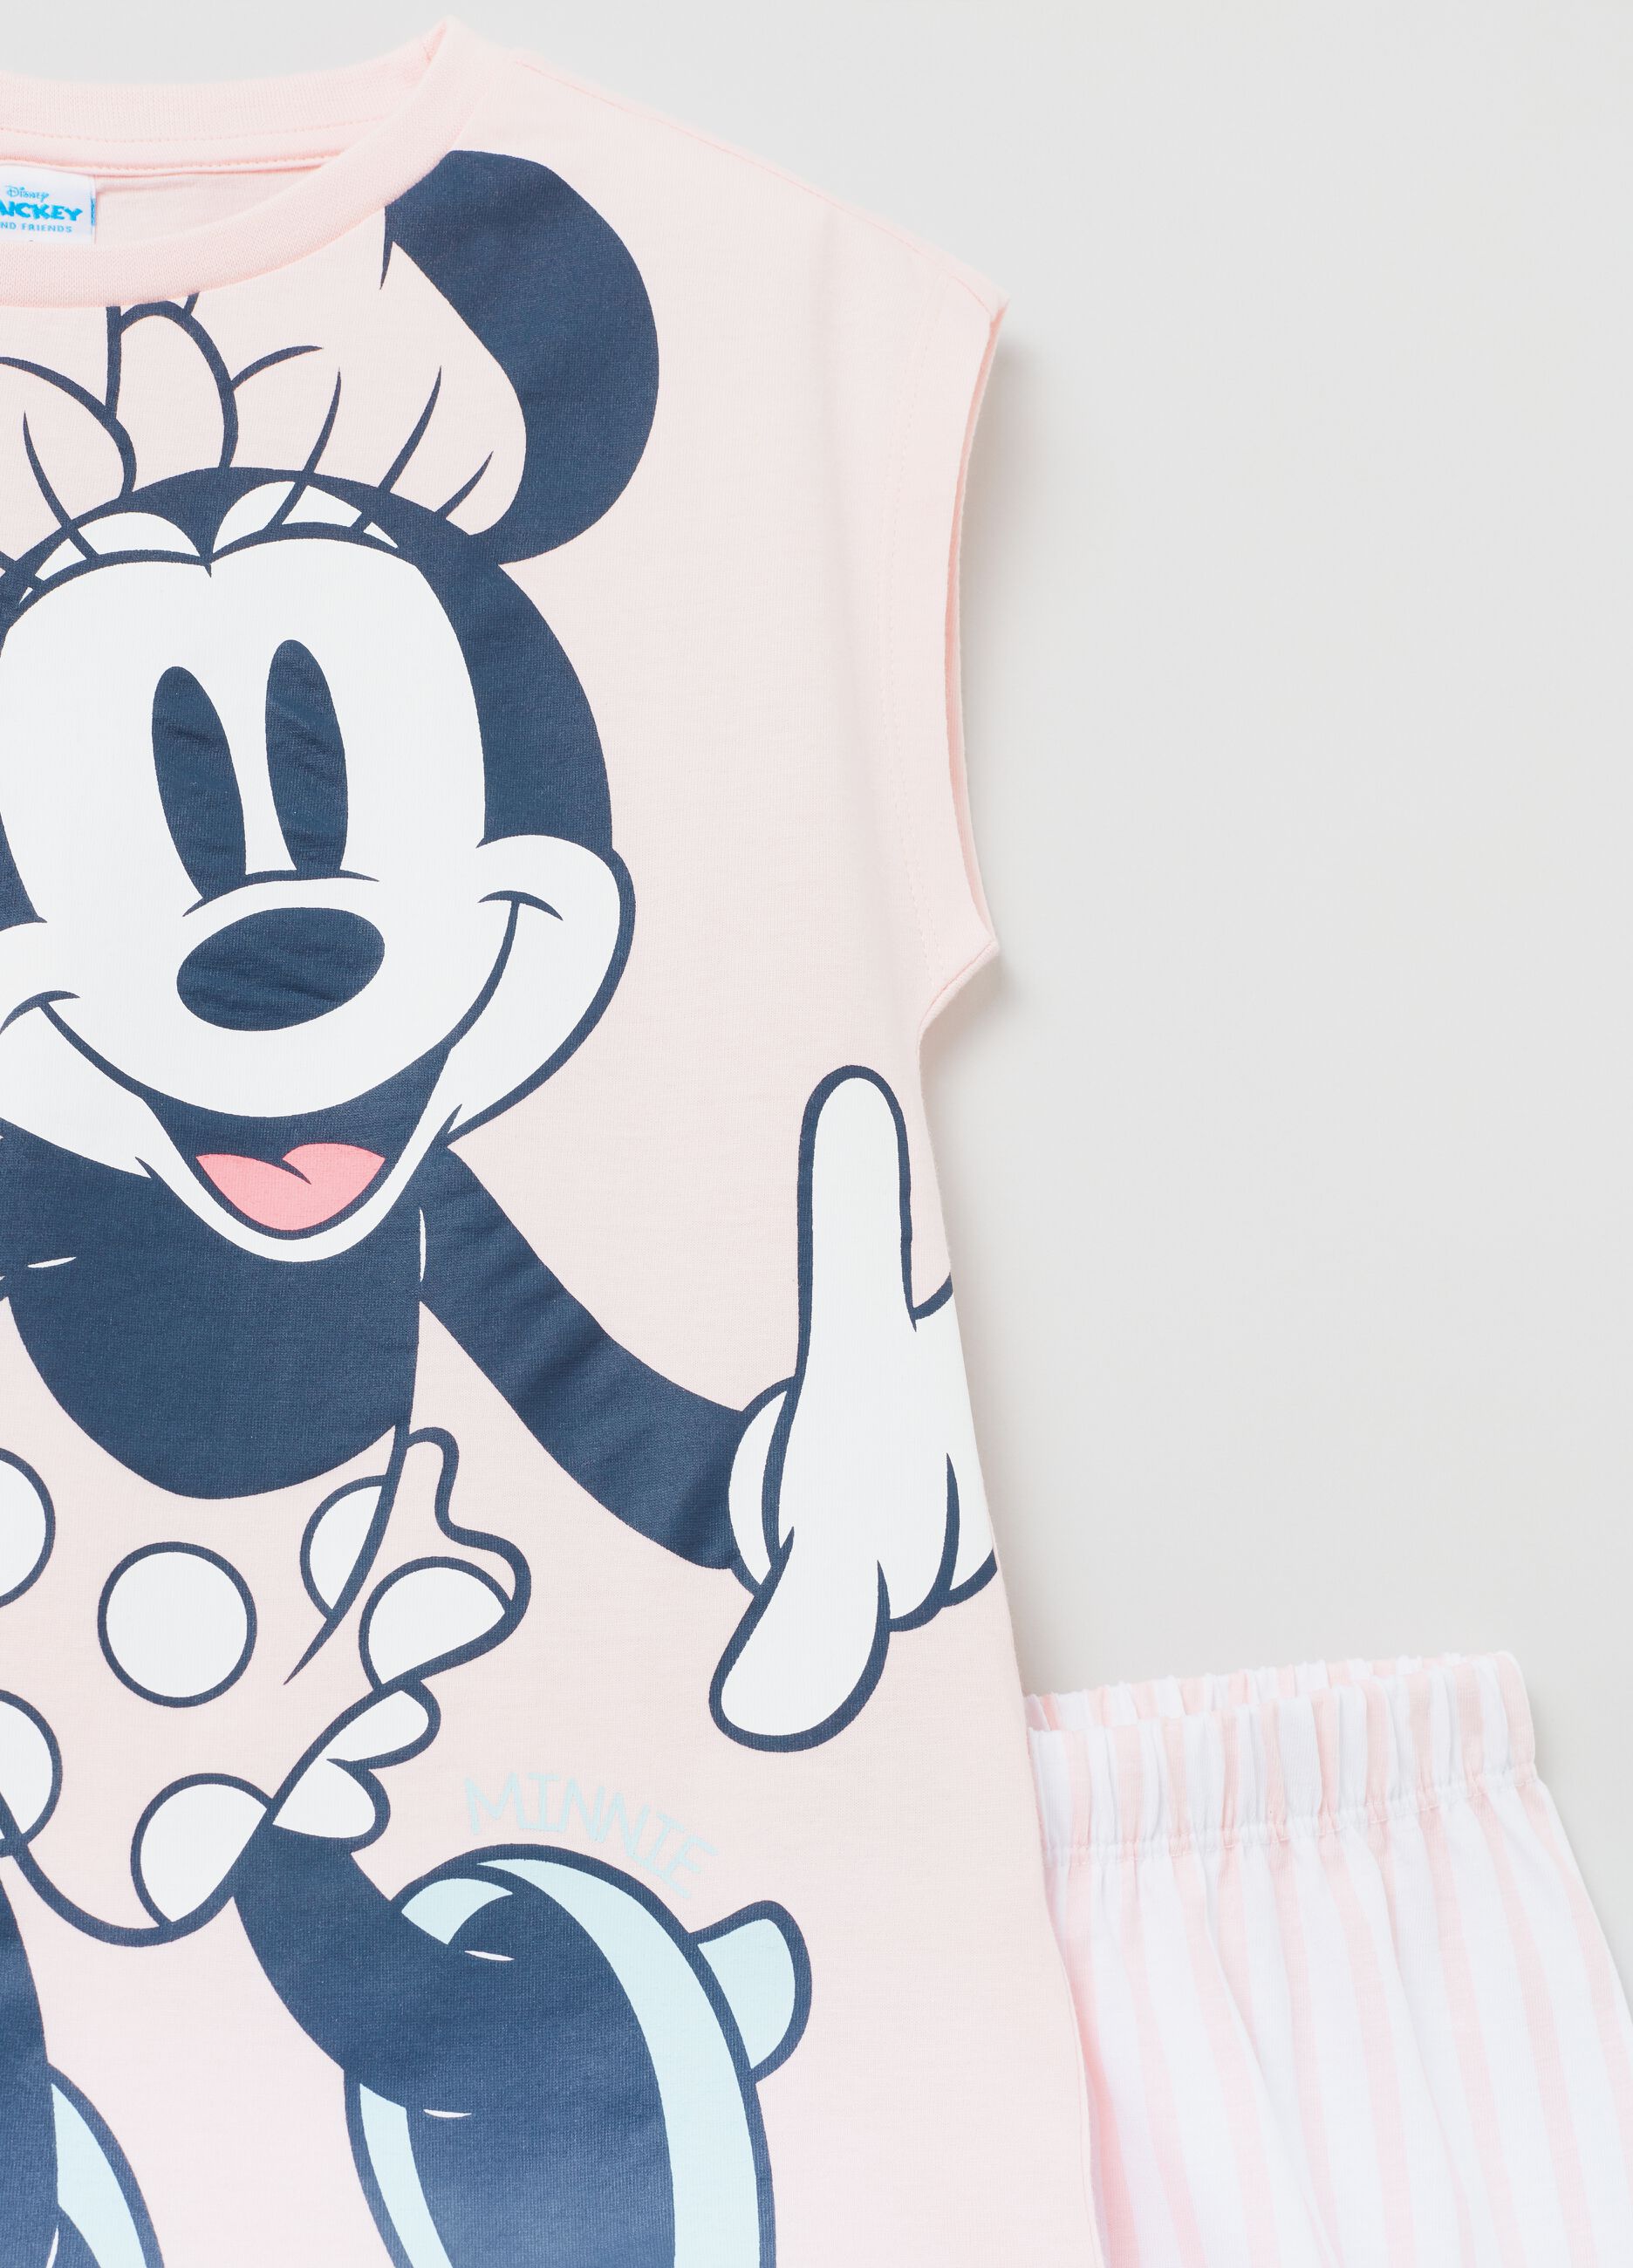 Short pyjamas with Disney Minnie Mouse print